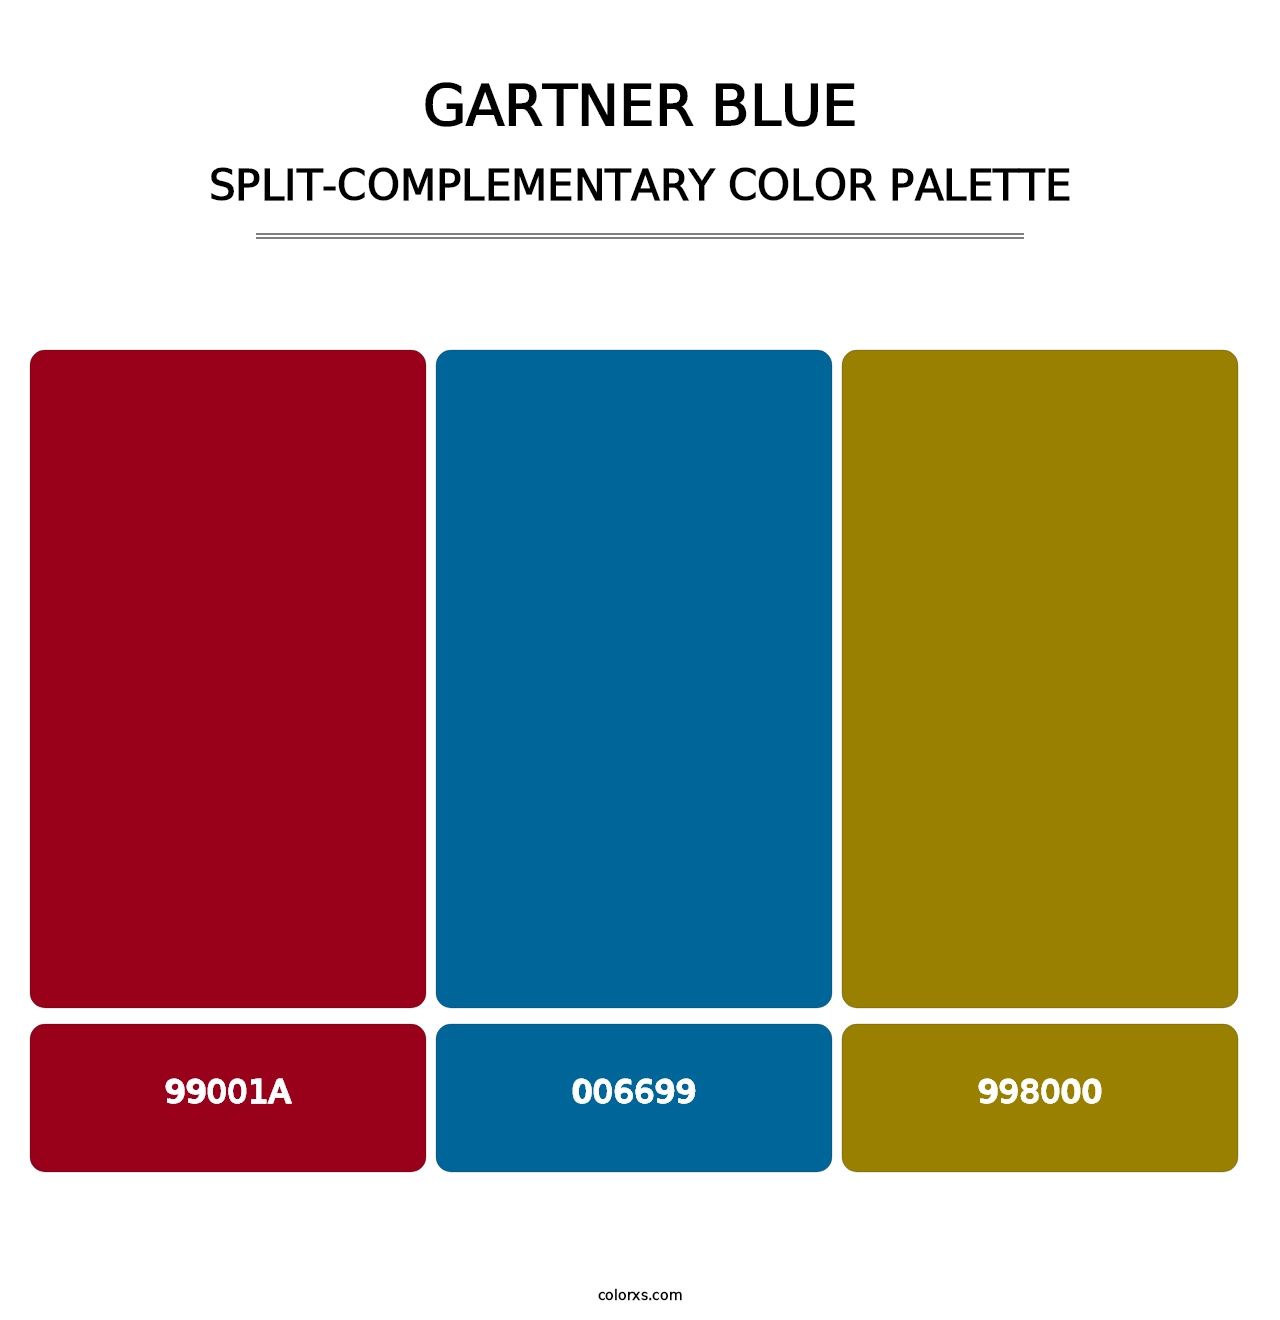 Gartner Blue - Split-Complementary Color Palette